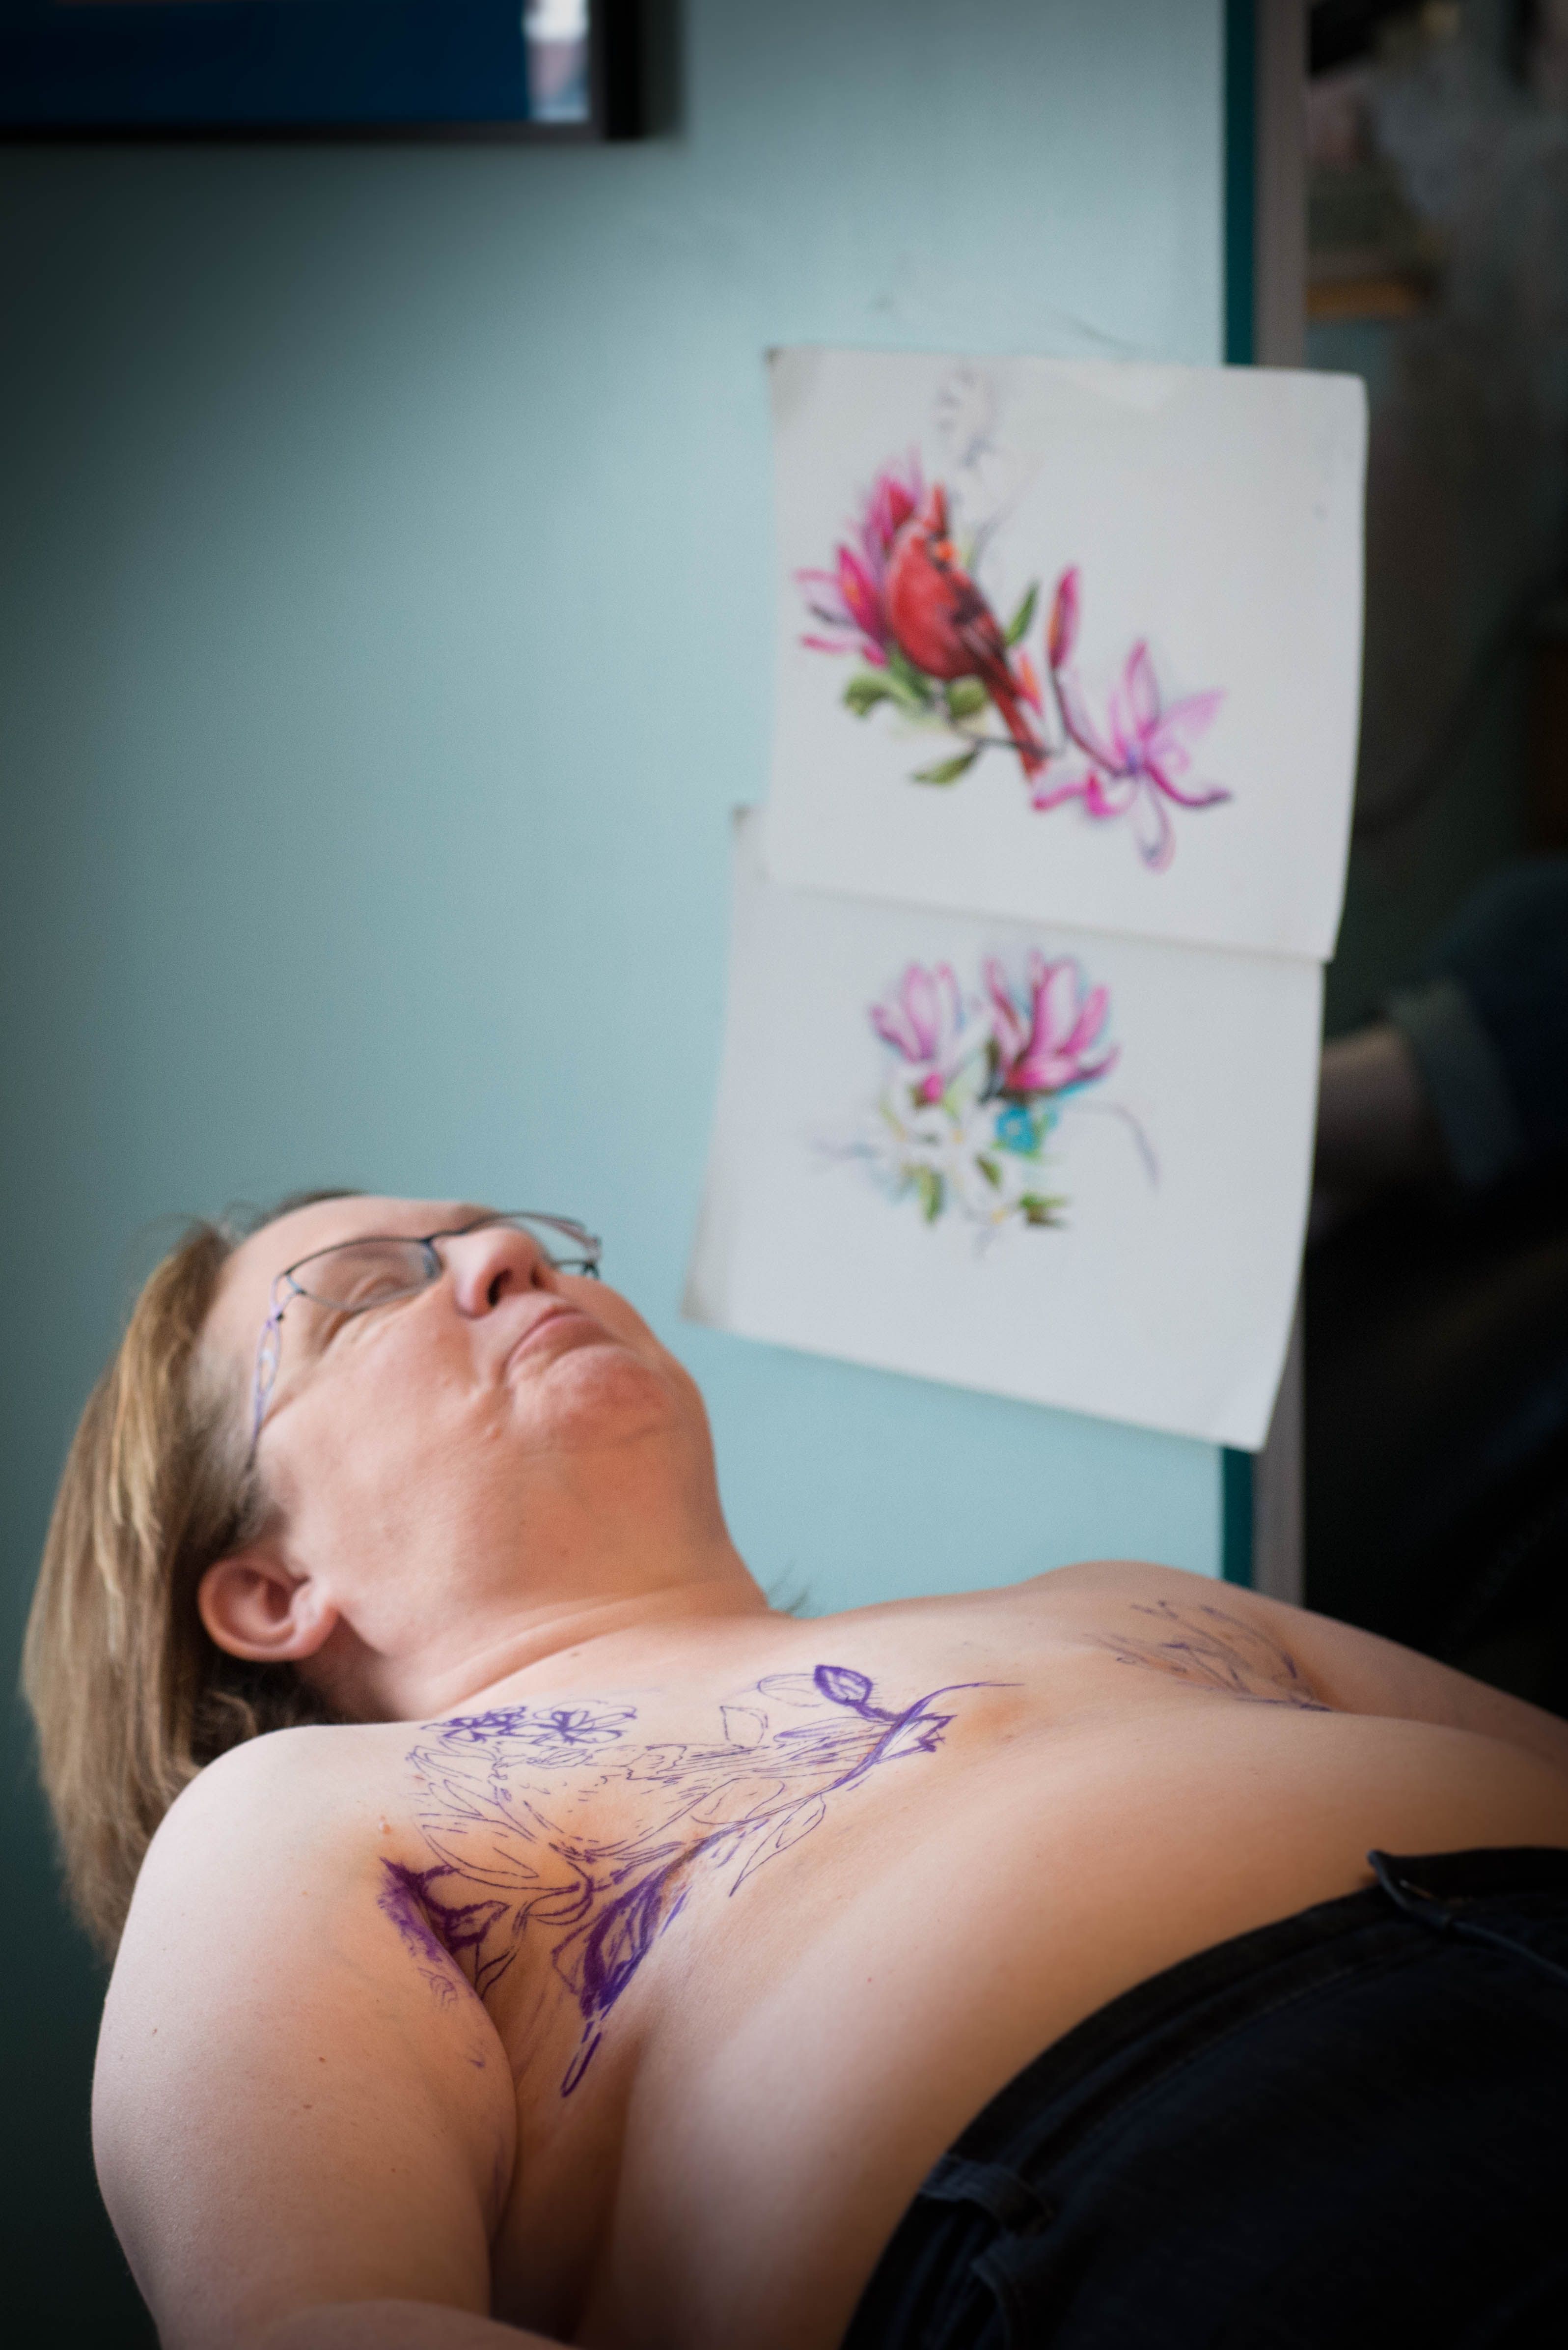 130 After mastectomy tattoo ideas